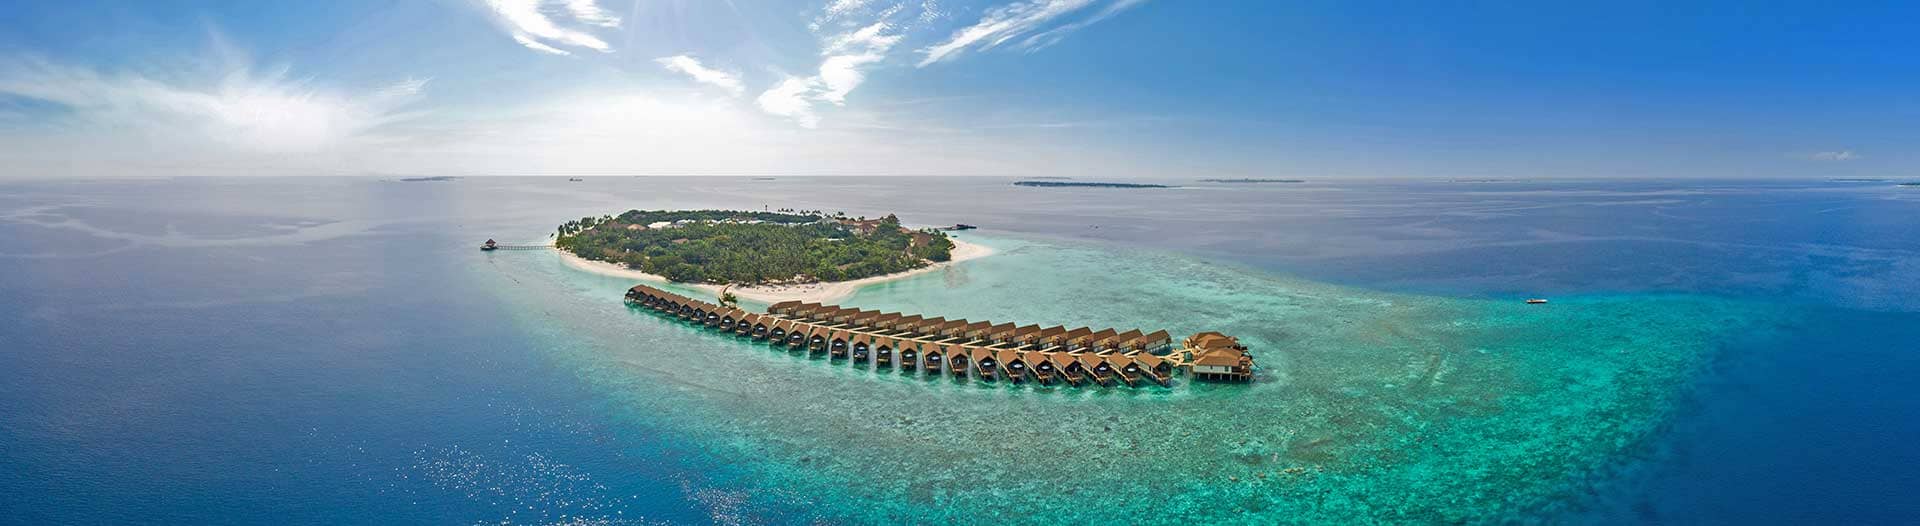 Reethi Faru Maldives Arial View